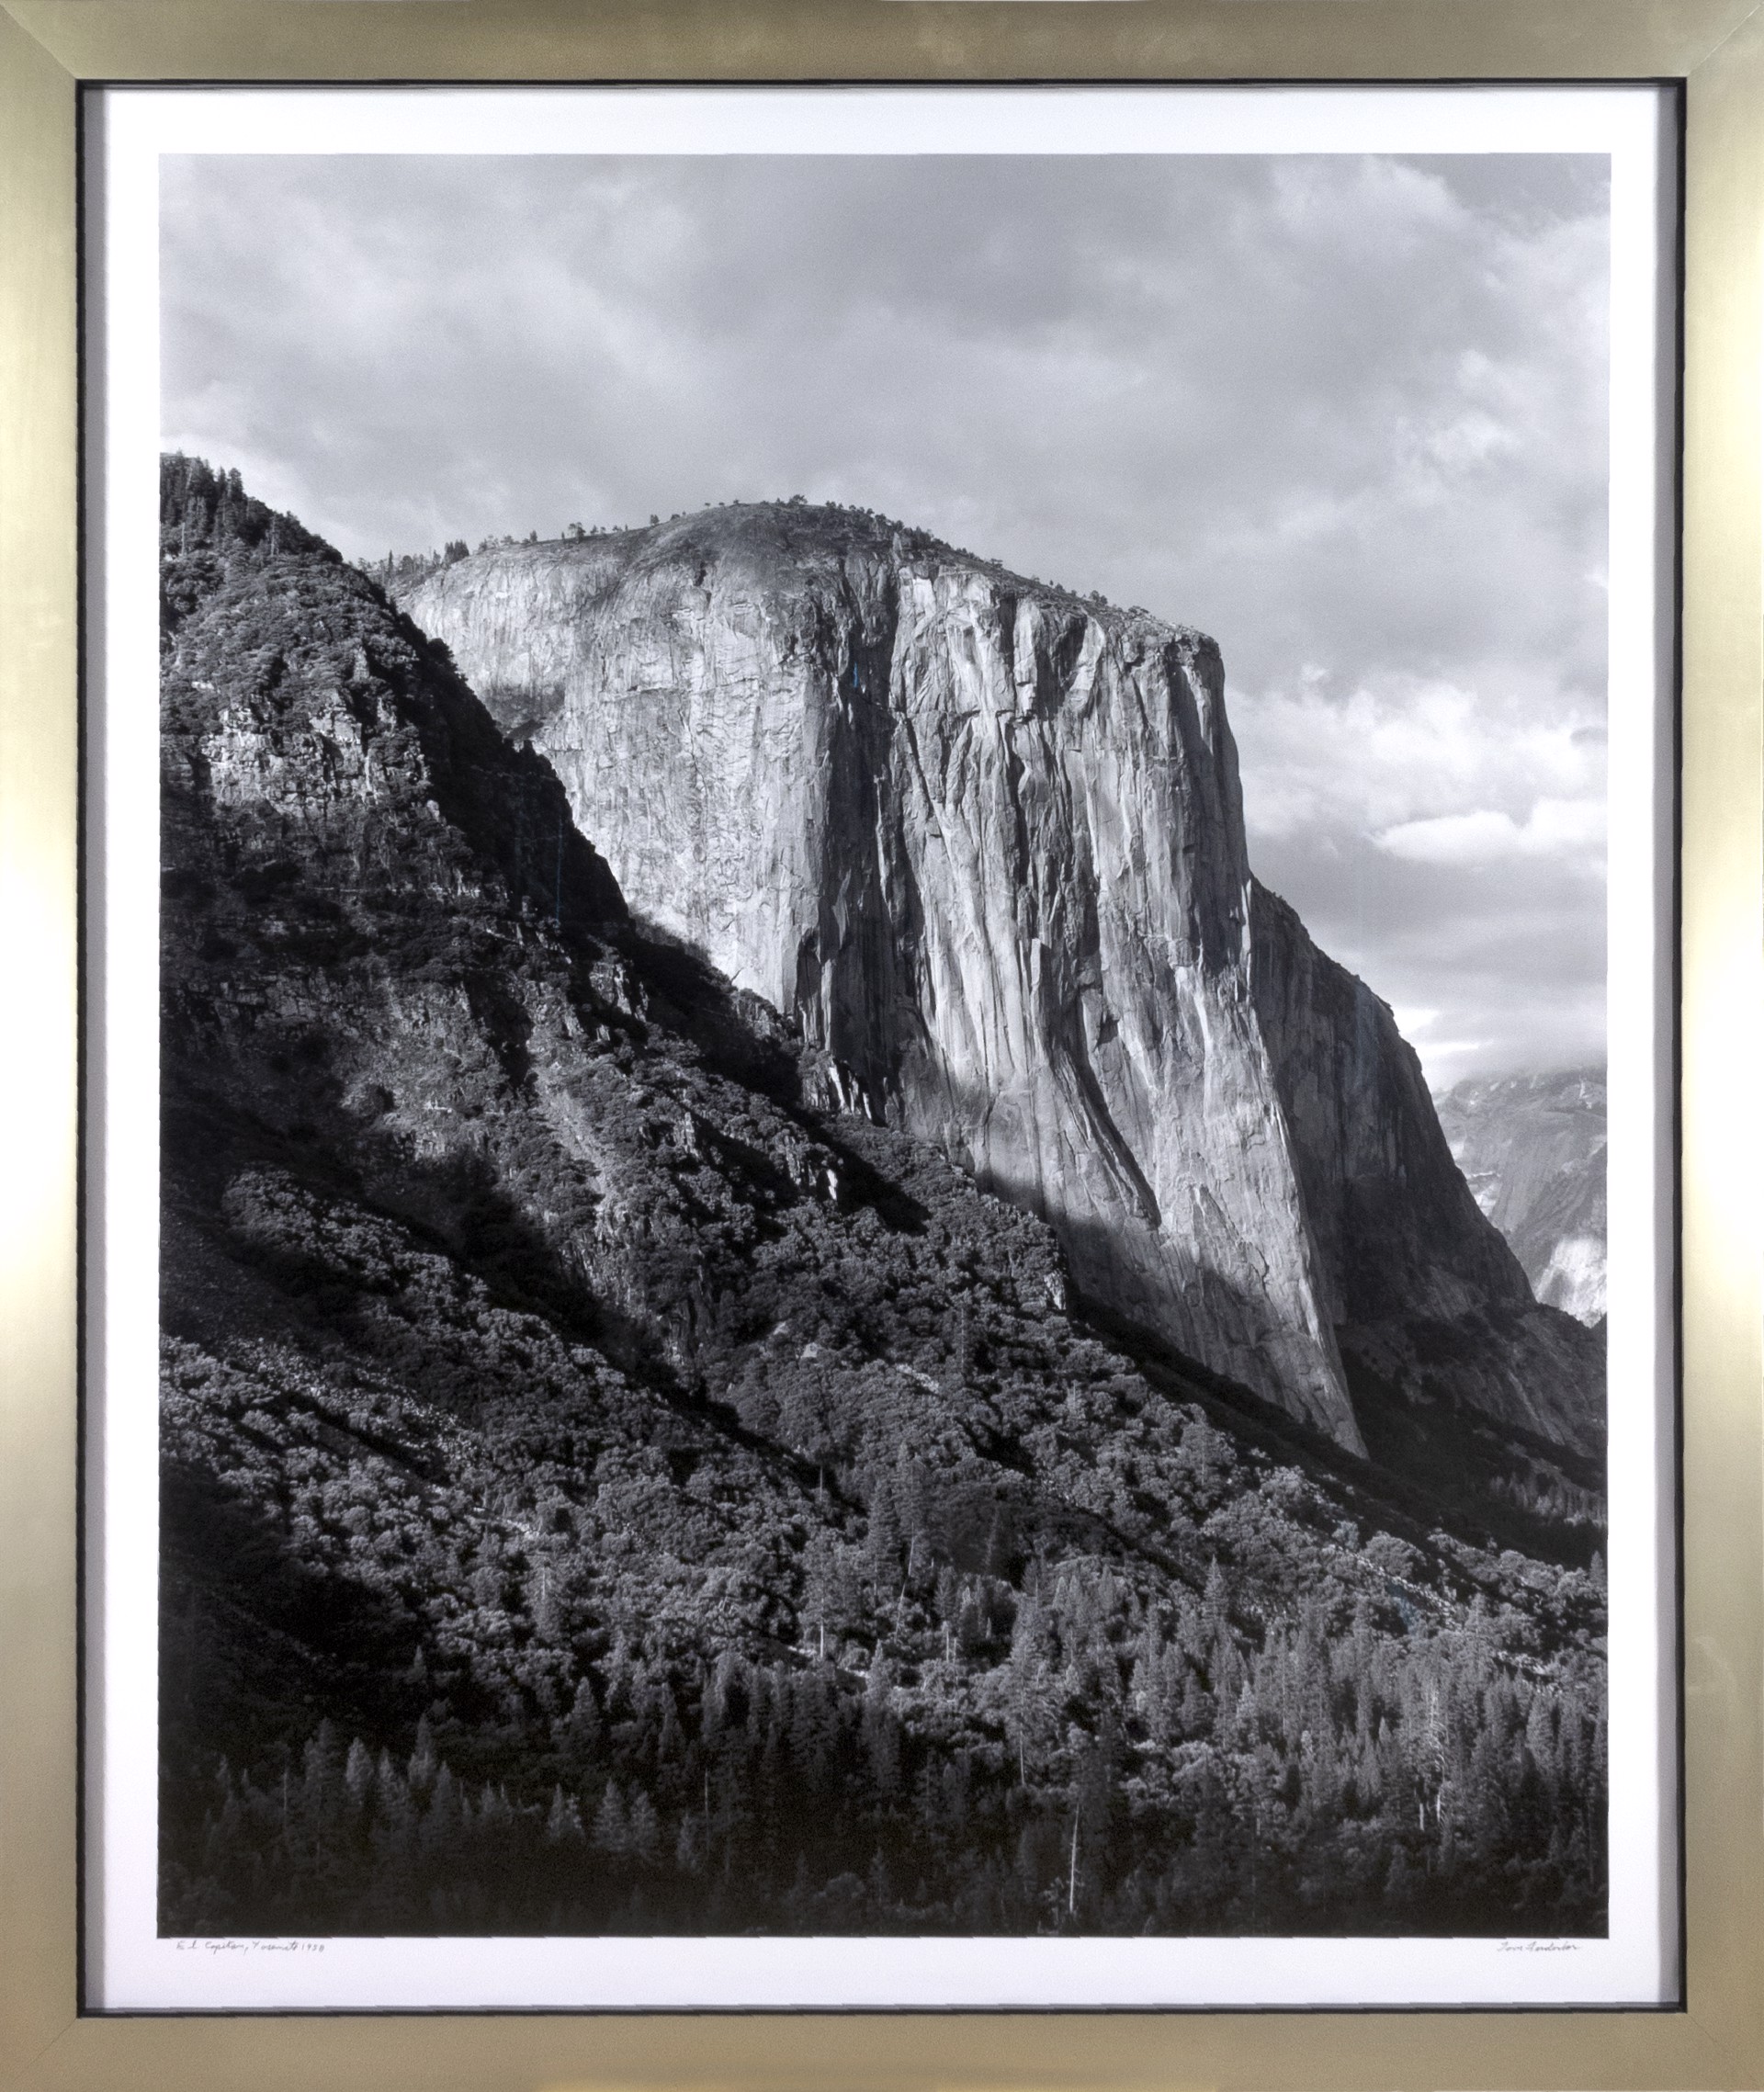 El Capitan (Yosemite National Park, CA) by Thomas Ferderbar